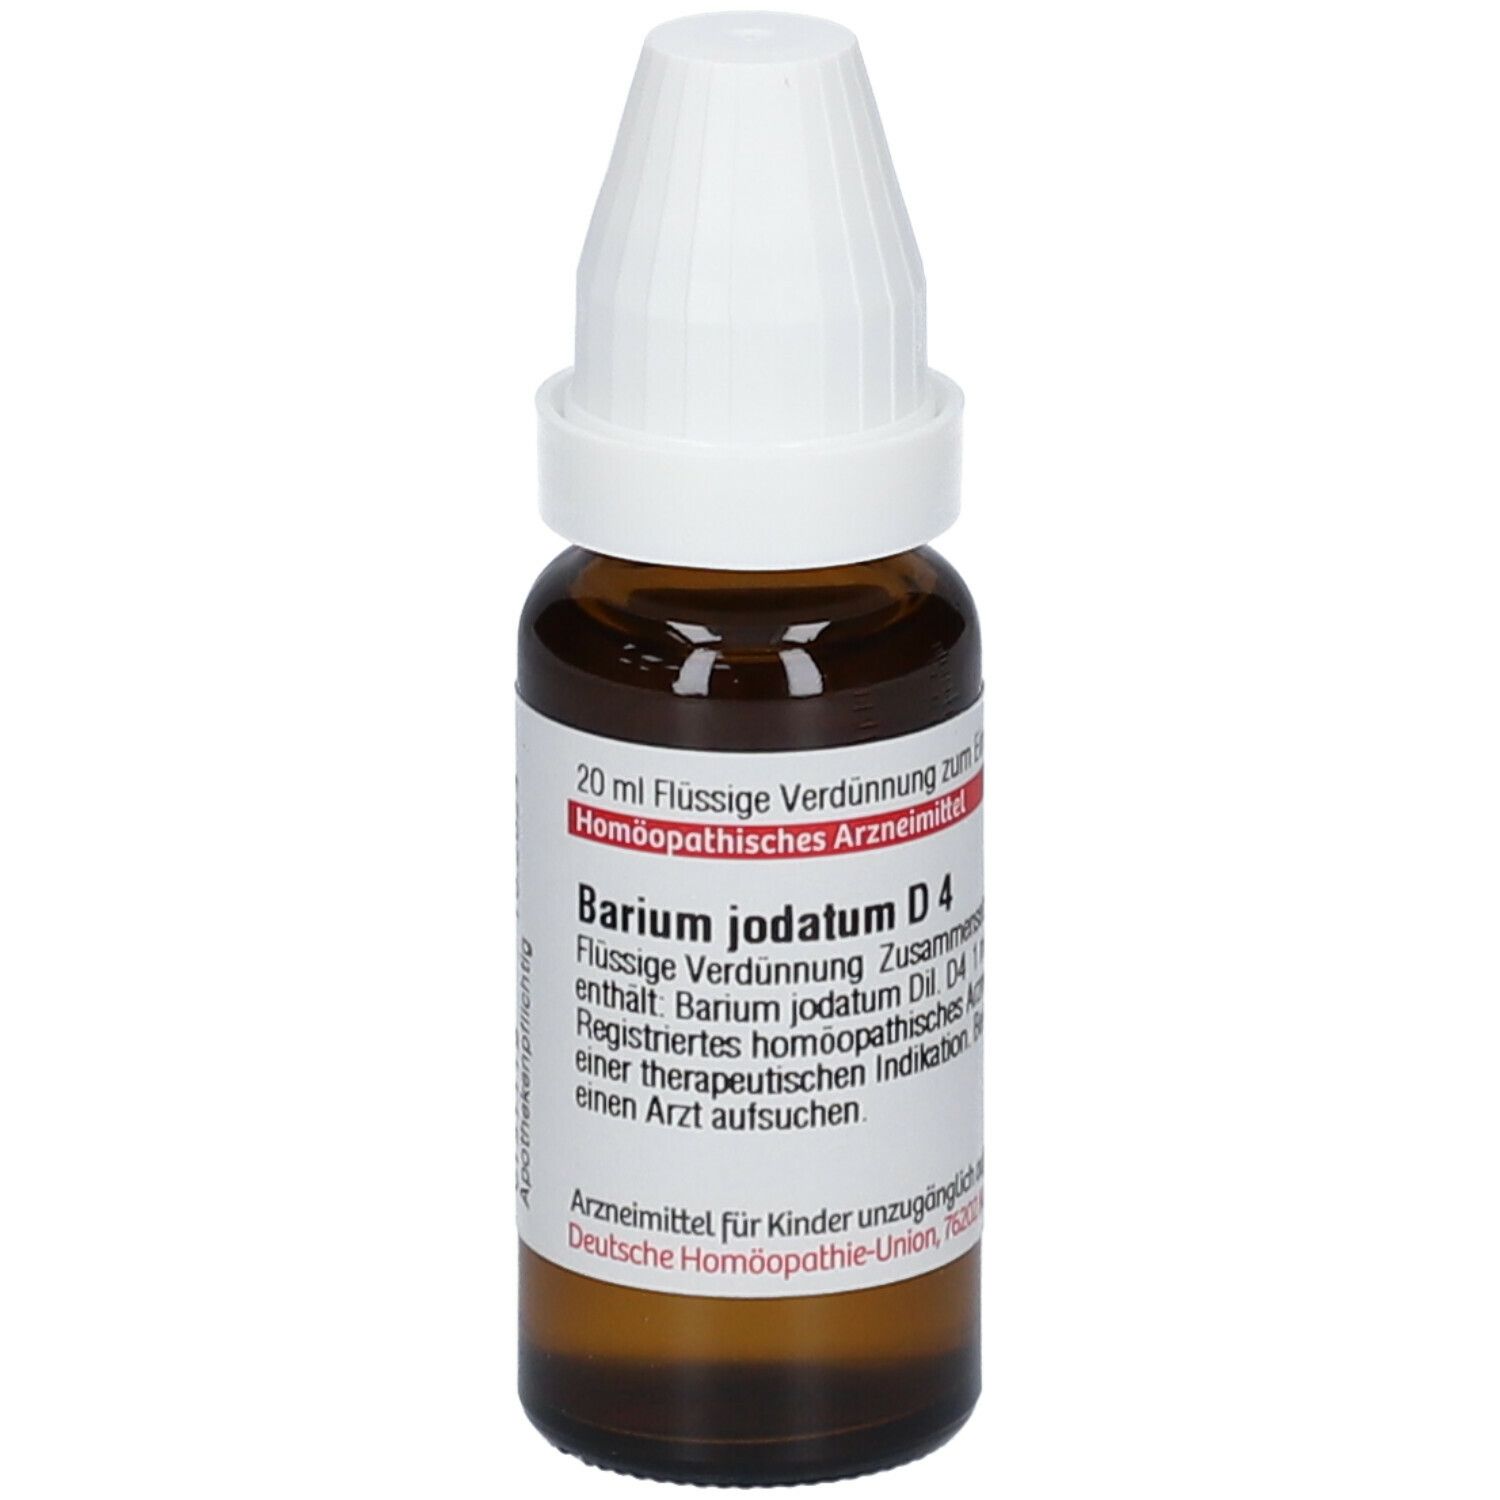 DHU Barium Jodatum D4